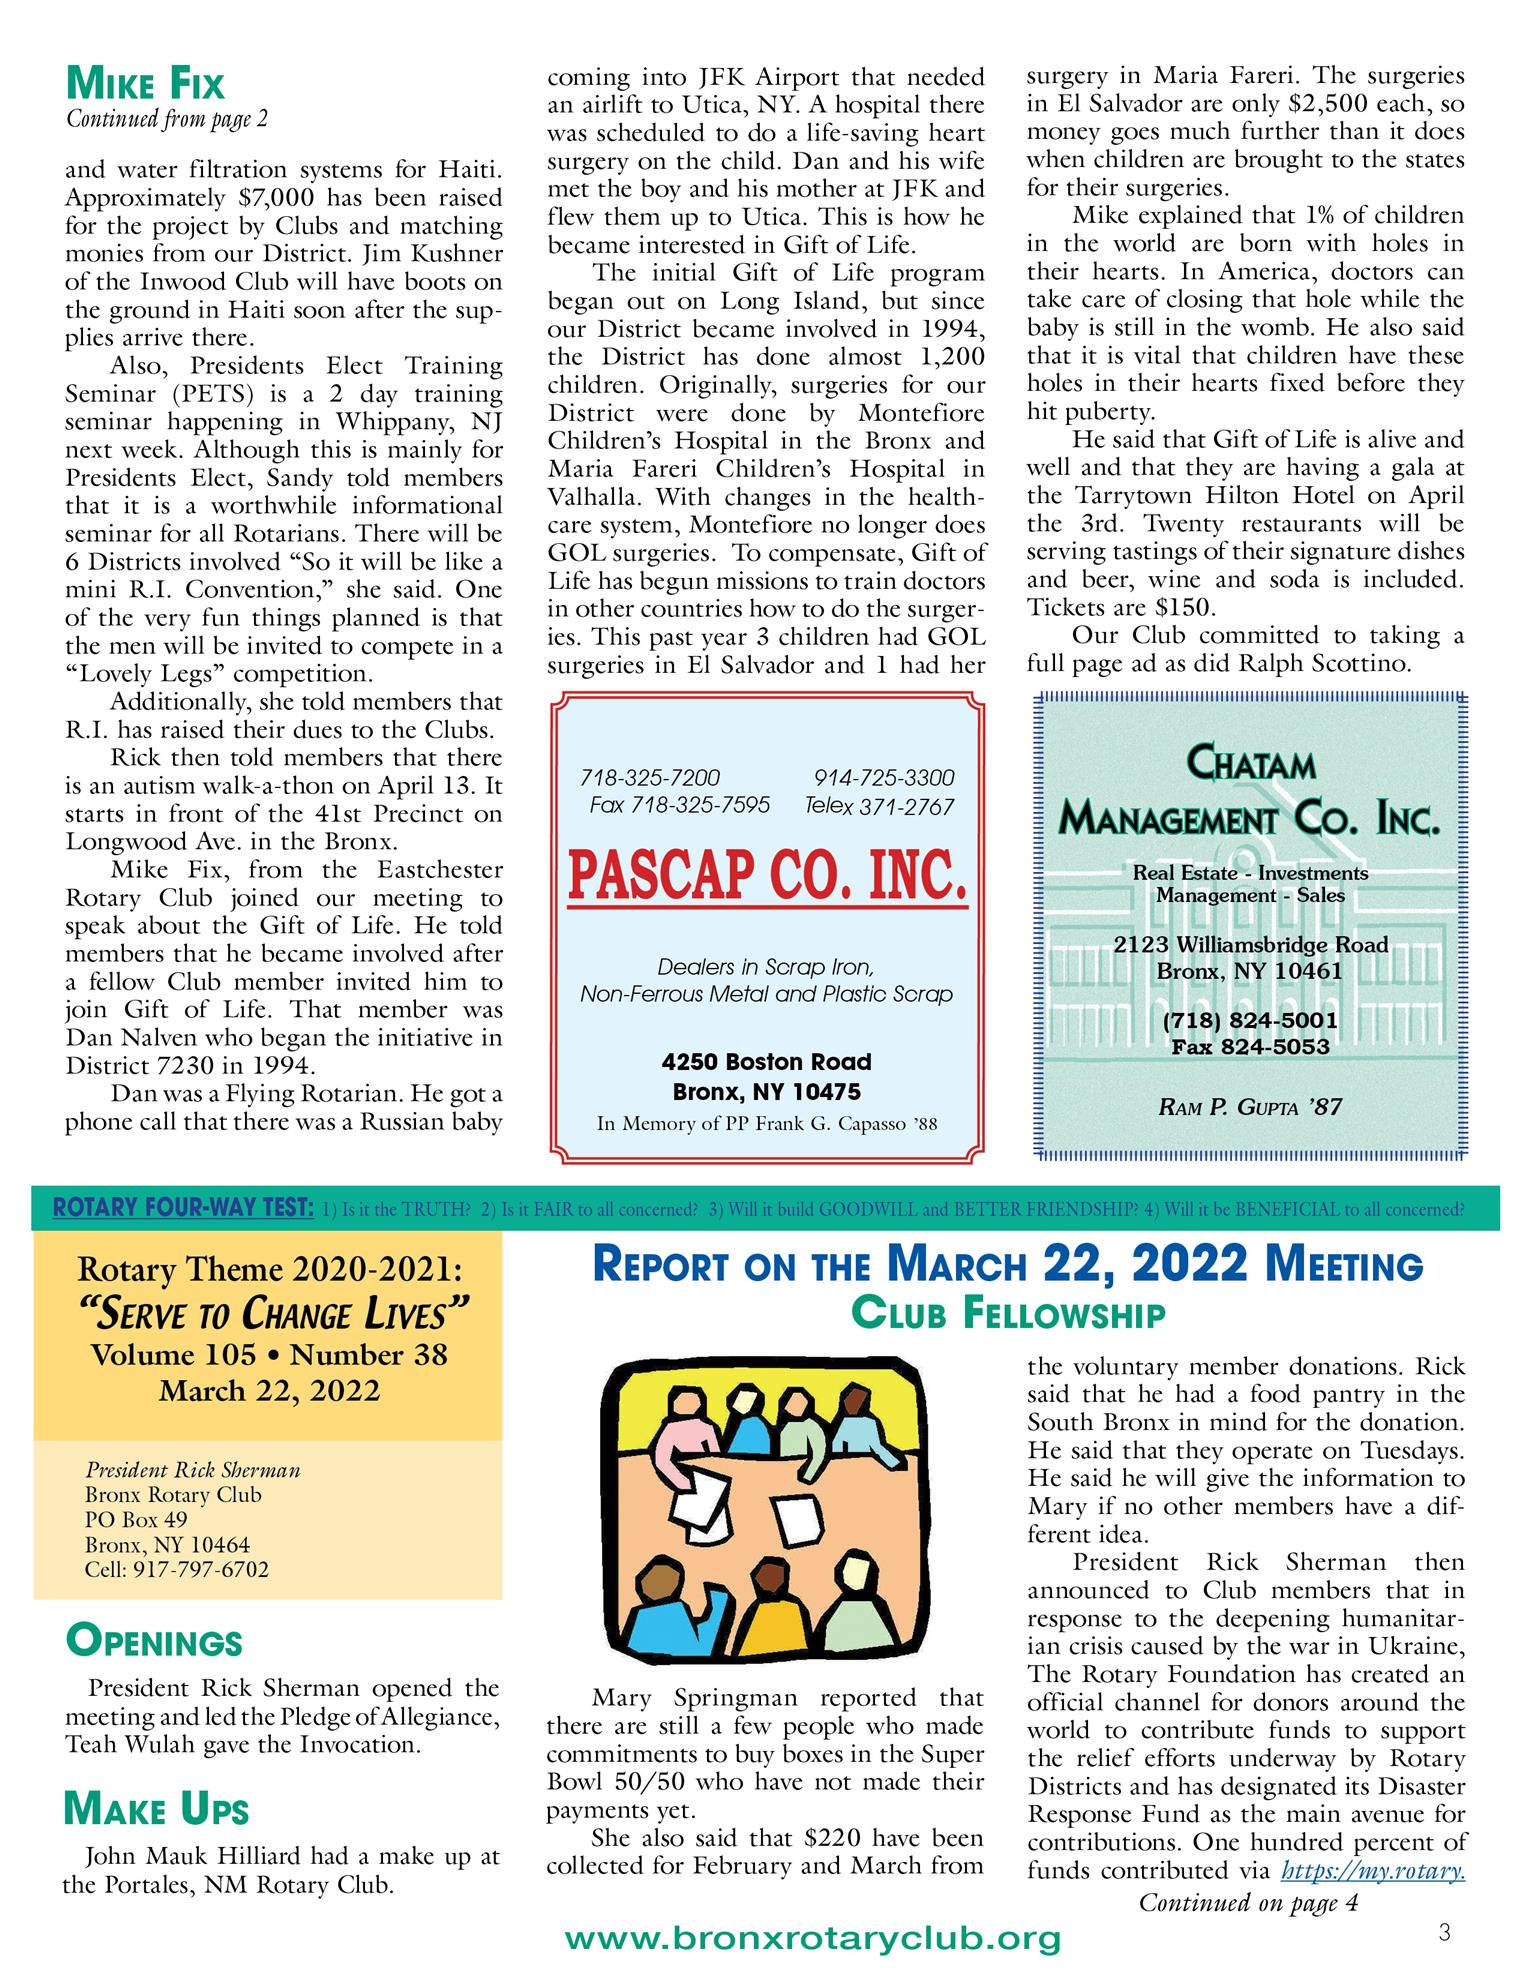 Tuesdays newsletter 3/8, 3/15 & 3/22/2022 p3